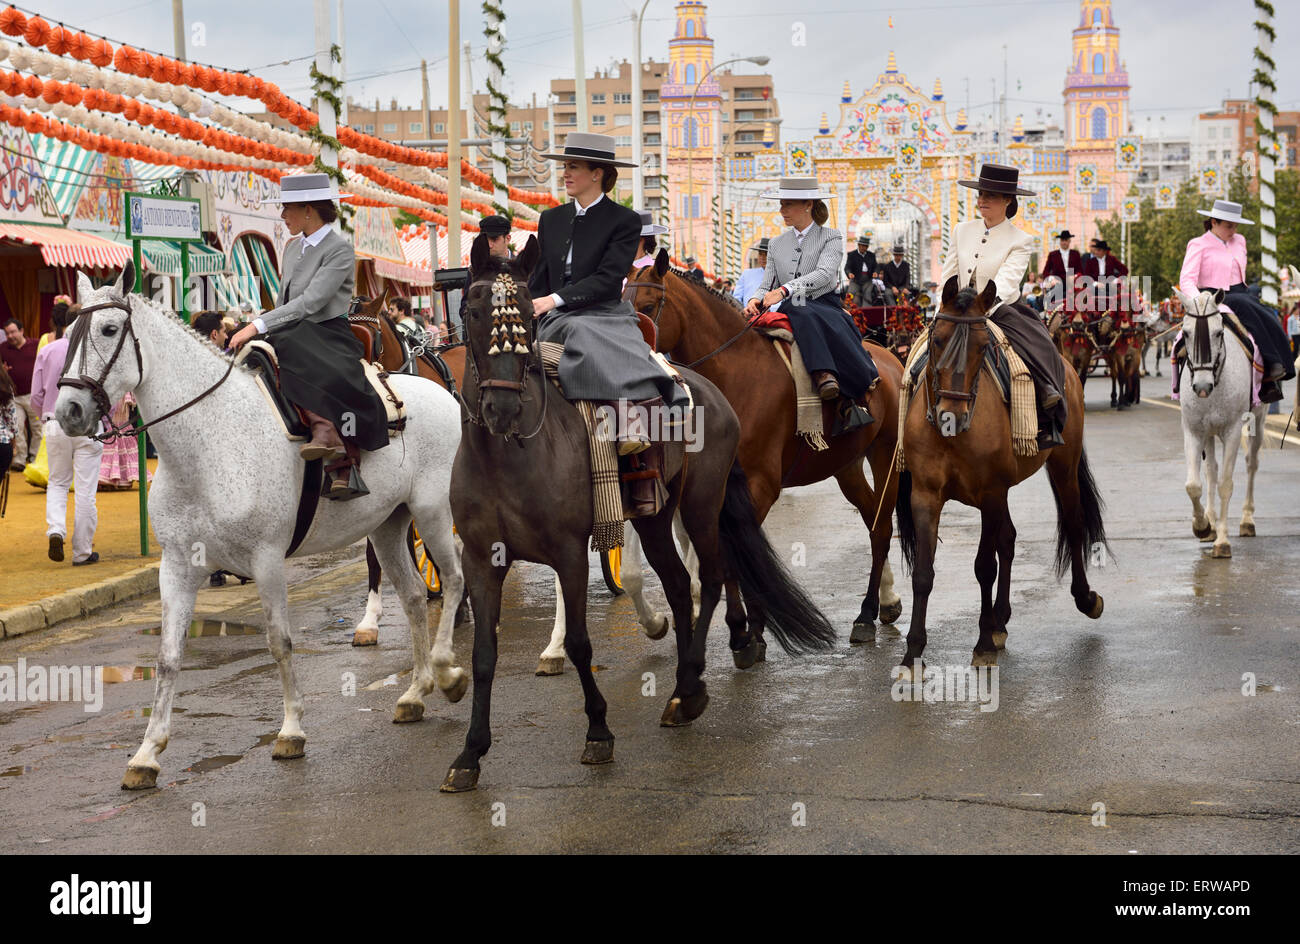 Women on horseback riding sidesaddle on Antonio Bienvenida street with Main Gate 2015 Seville April Fair Stock Photo